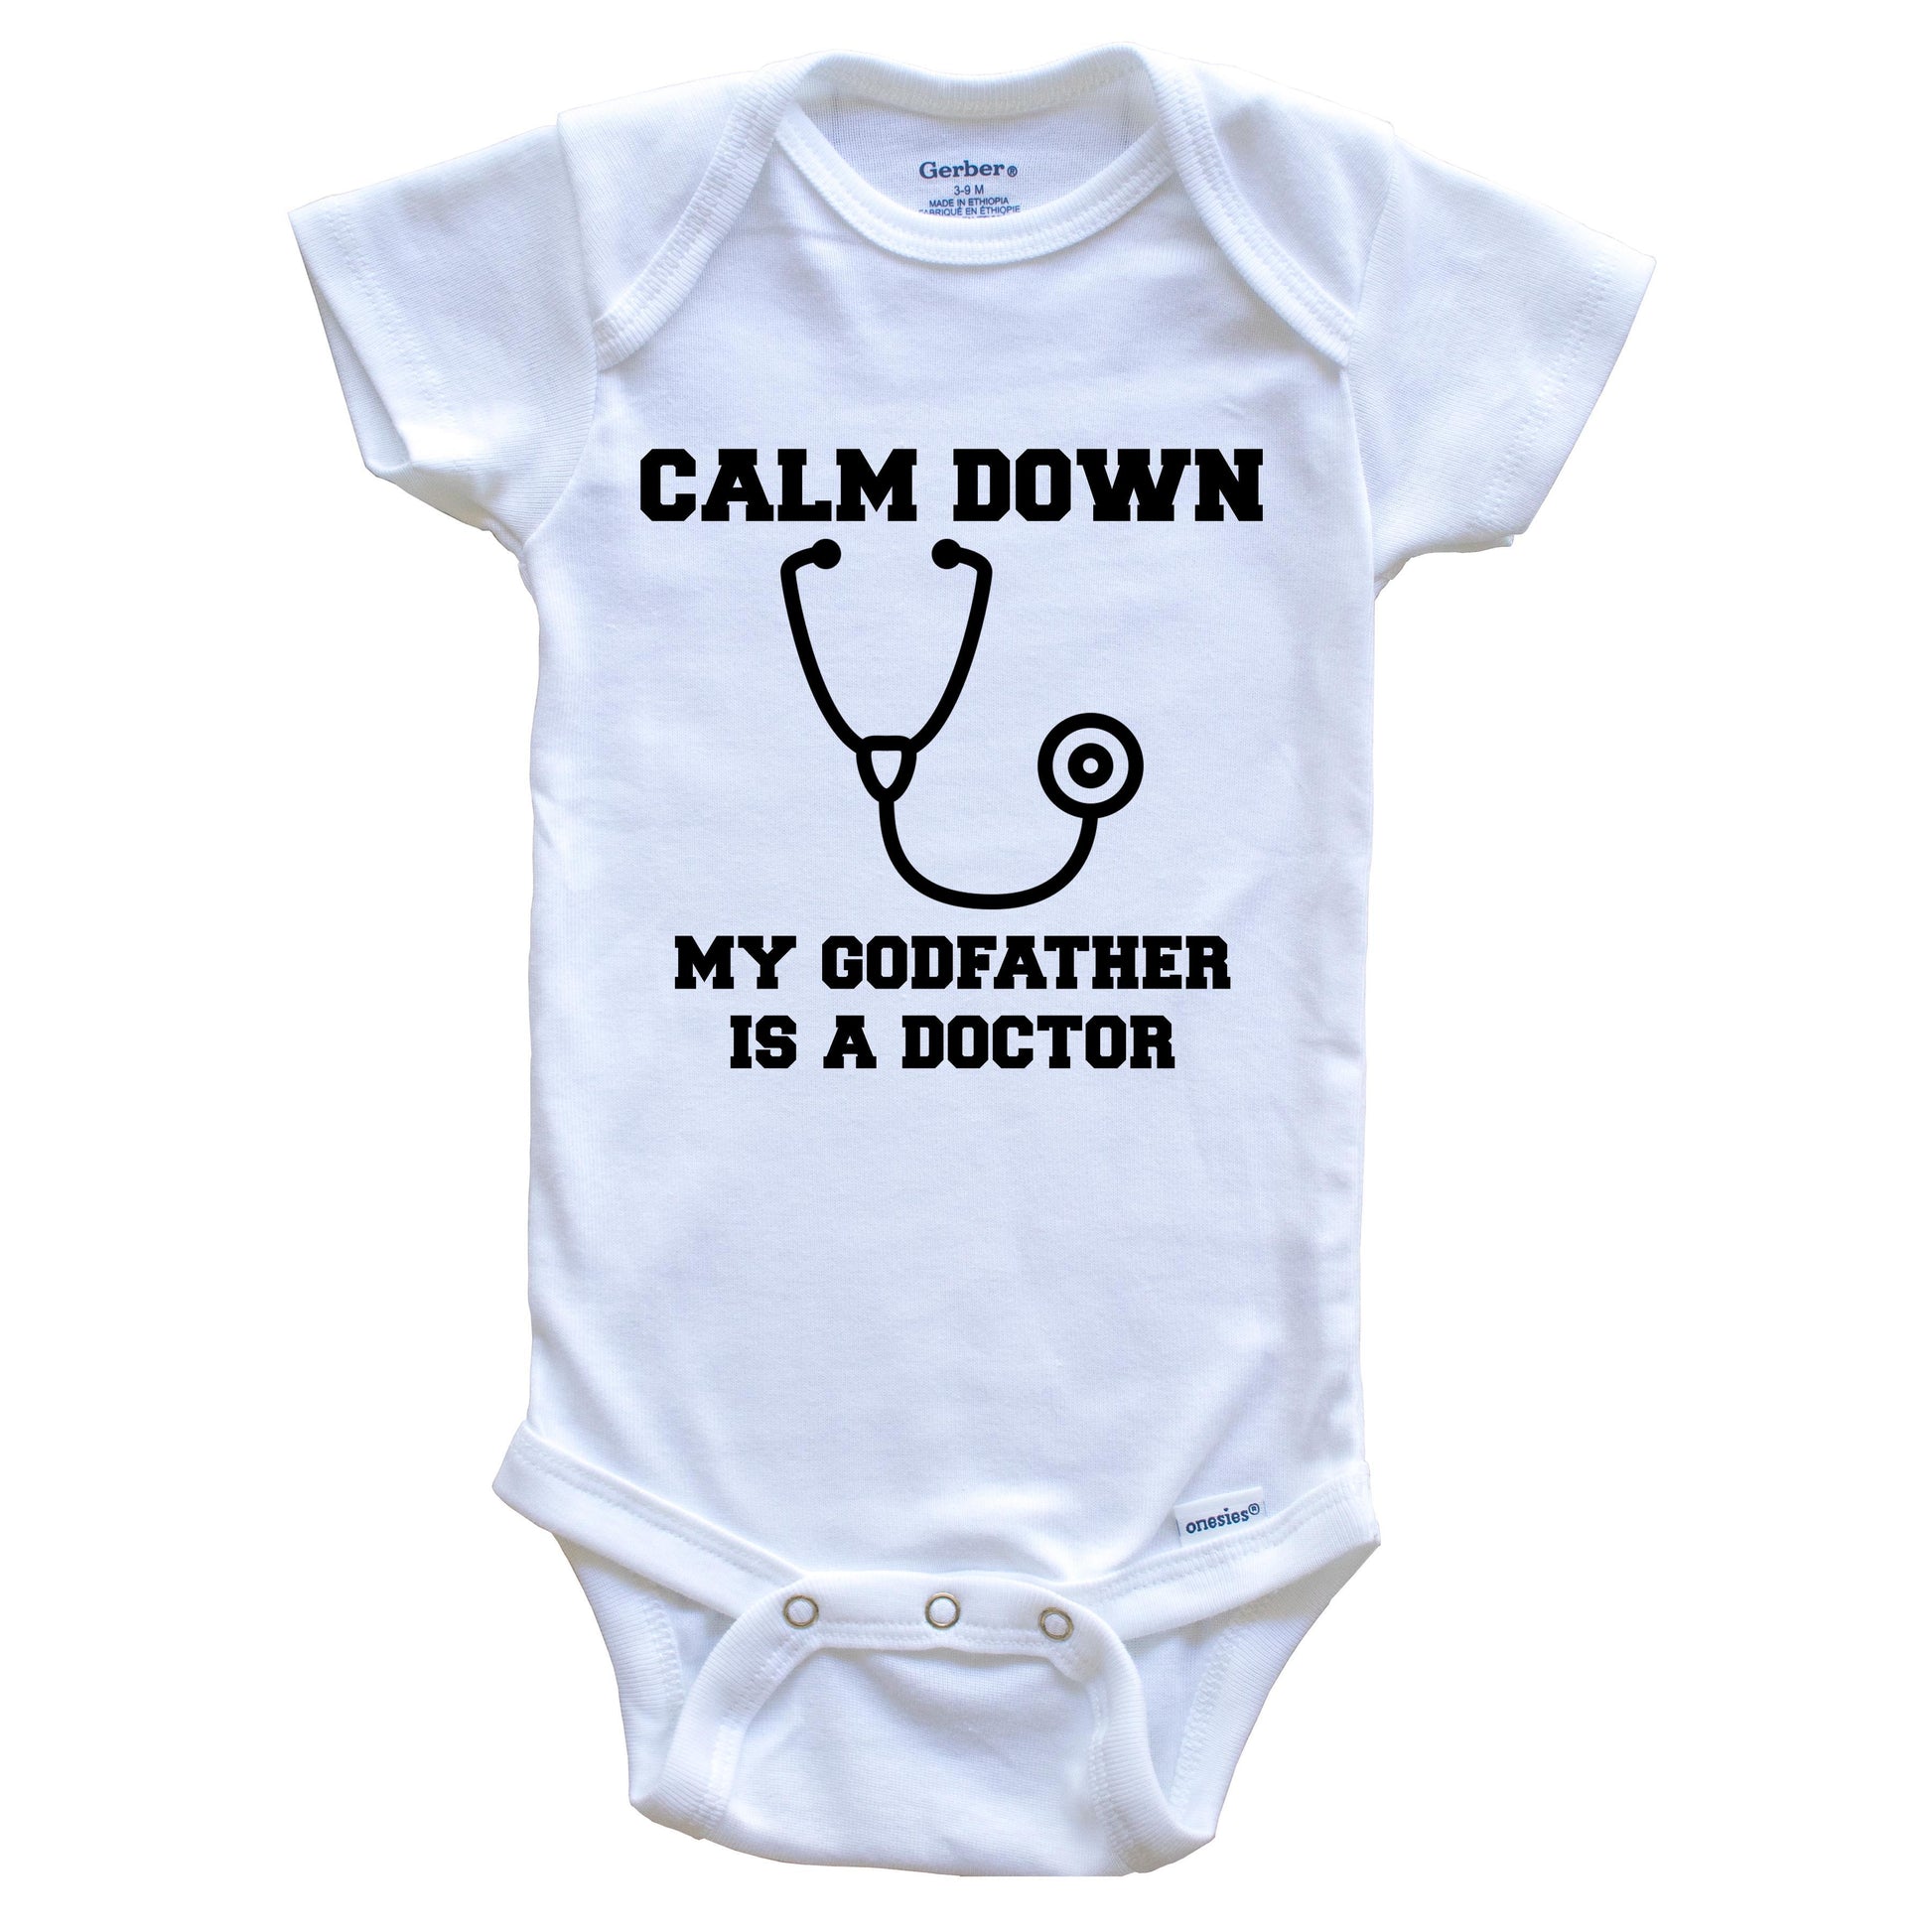 Calm Down My Godfather Is A Doctor Funny Baby Onesie - One Piece Baby Bodysuit